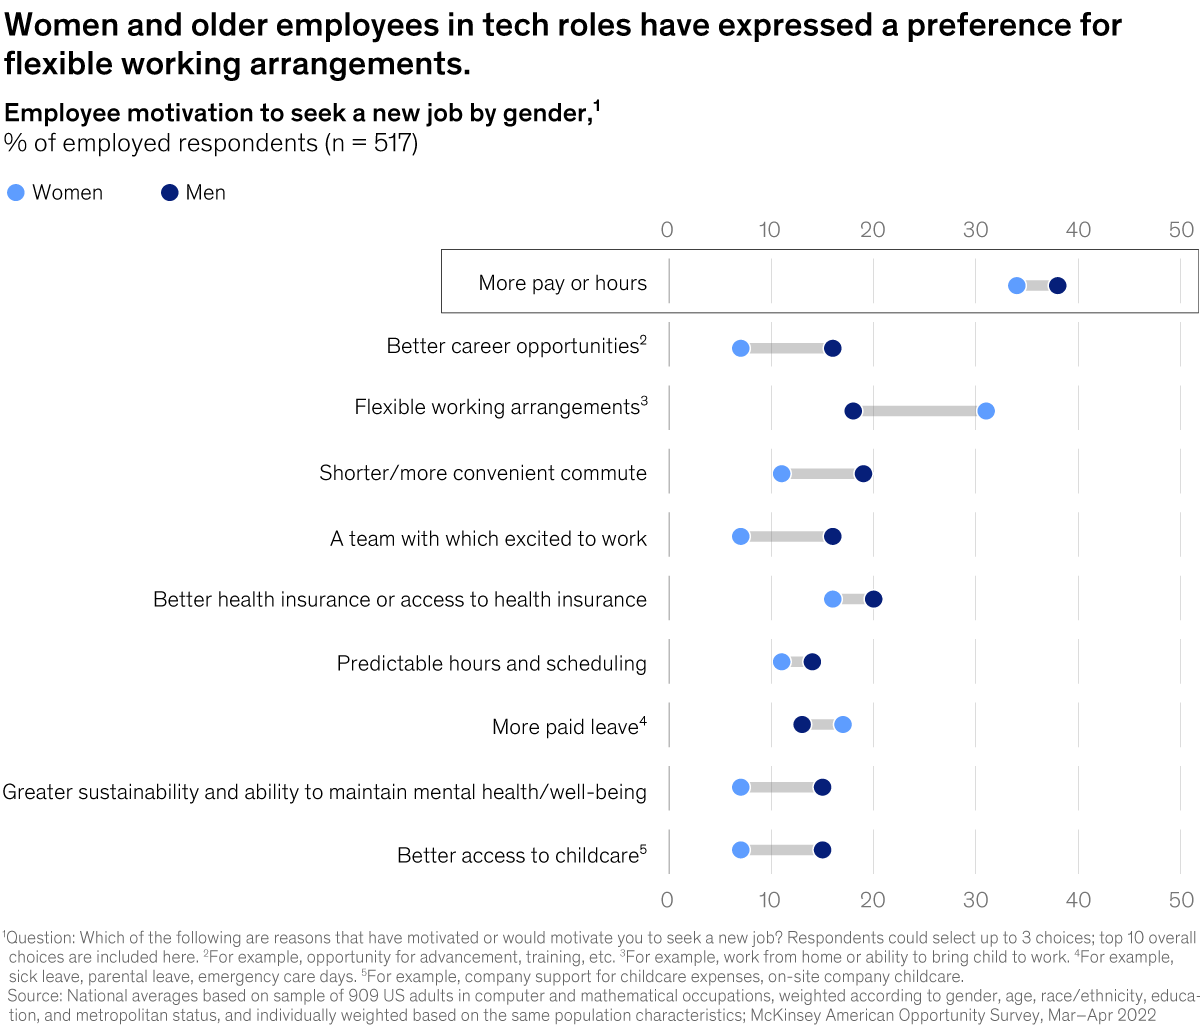 Chart of tech employee motivation for seeking a new job, by gender